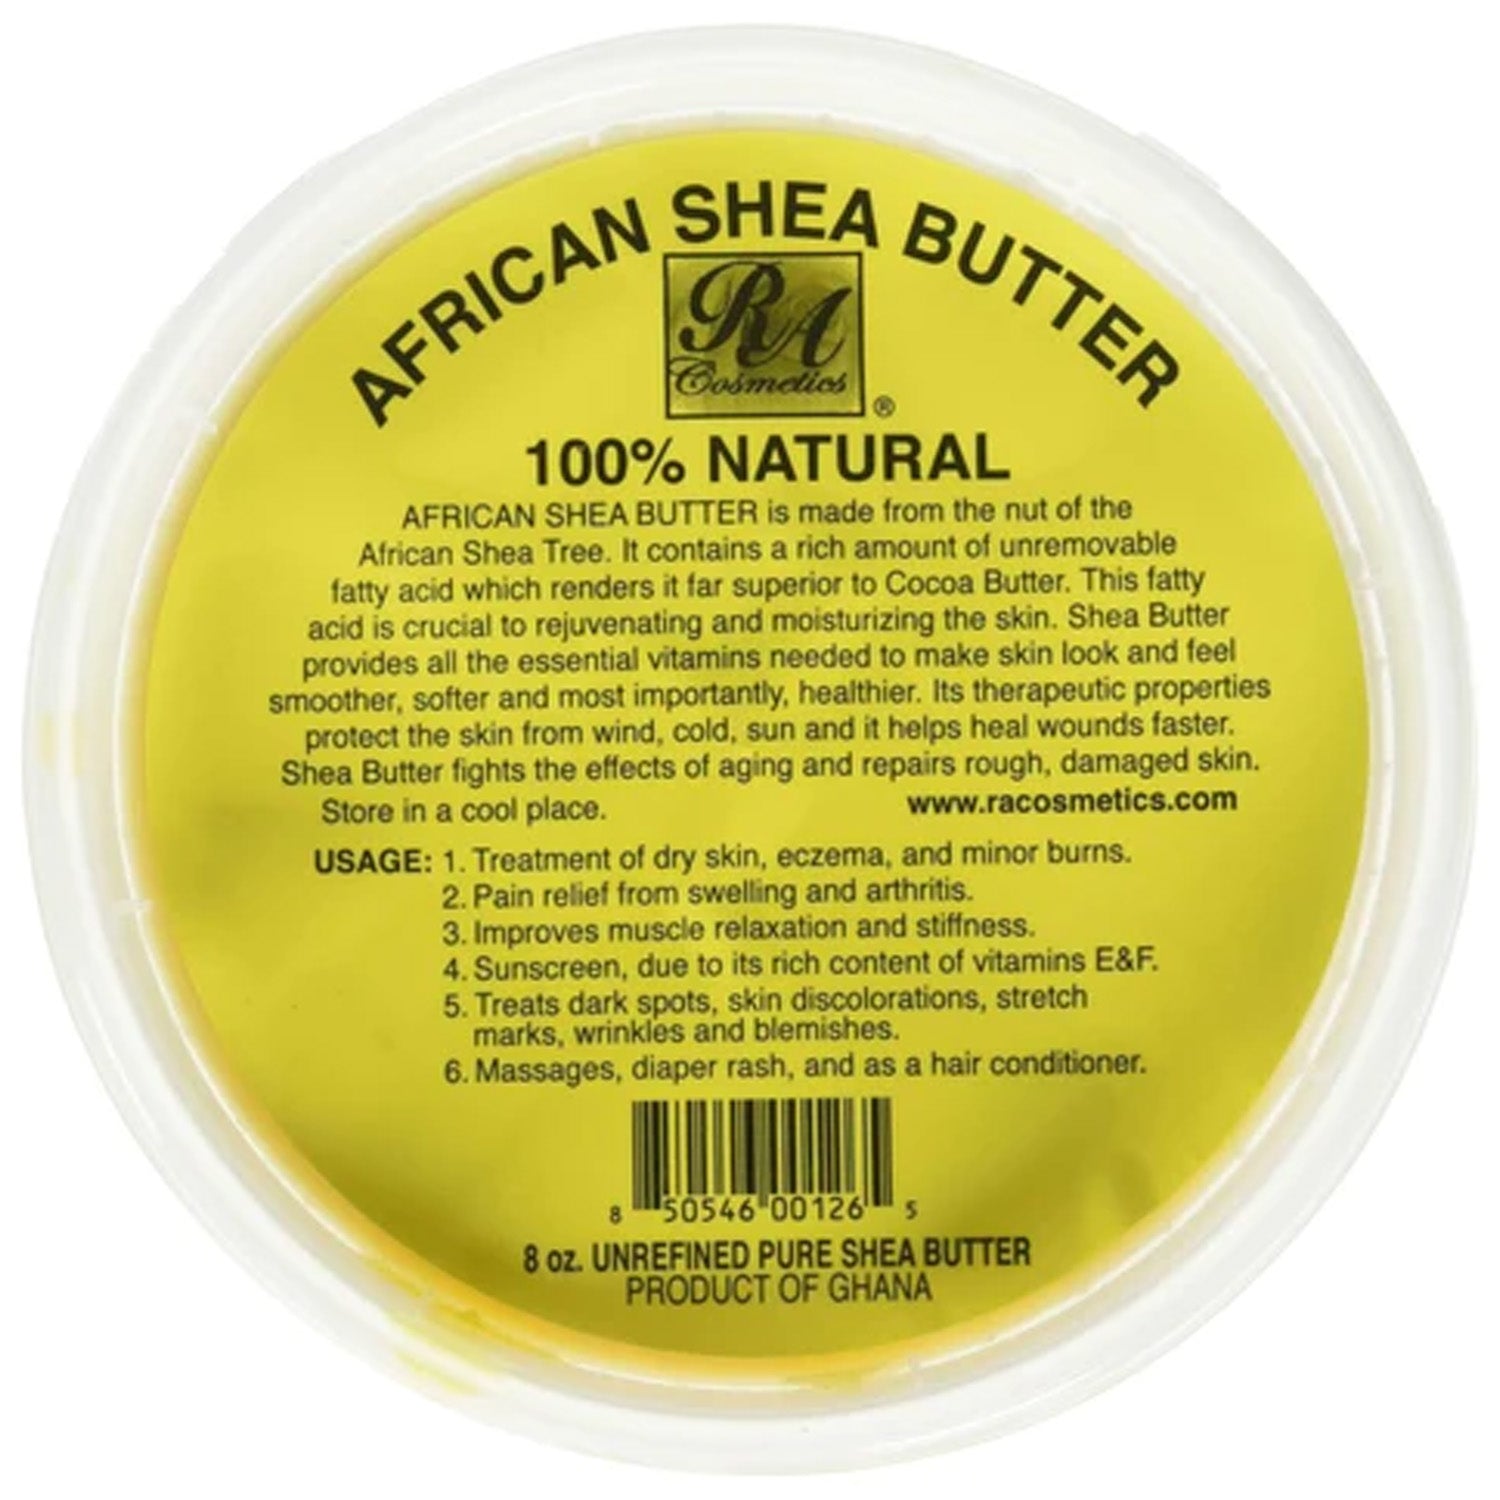 AFRICAN SHEA BUTTER 100% NATURAL CREAMY YELLOW 8oz.